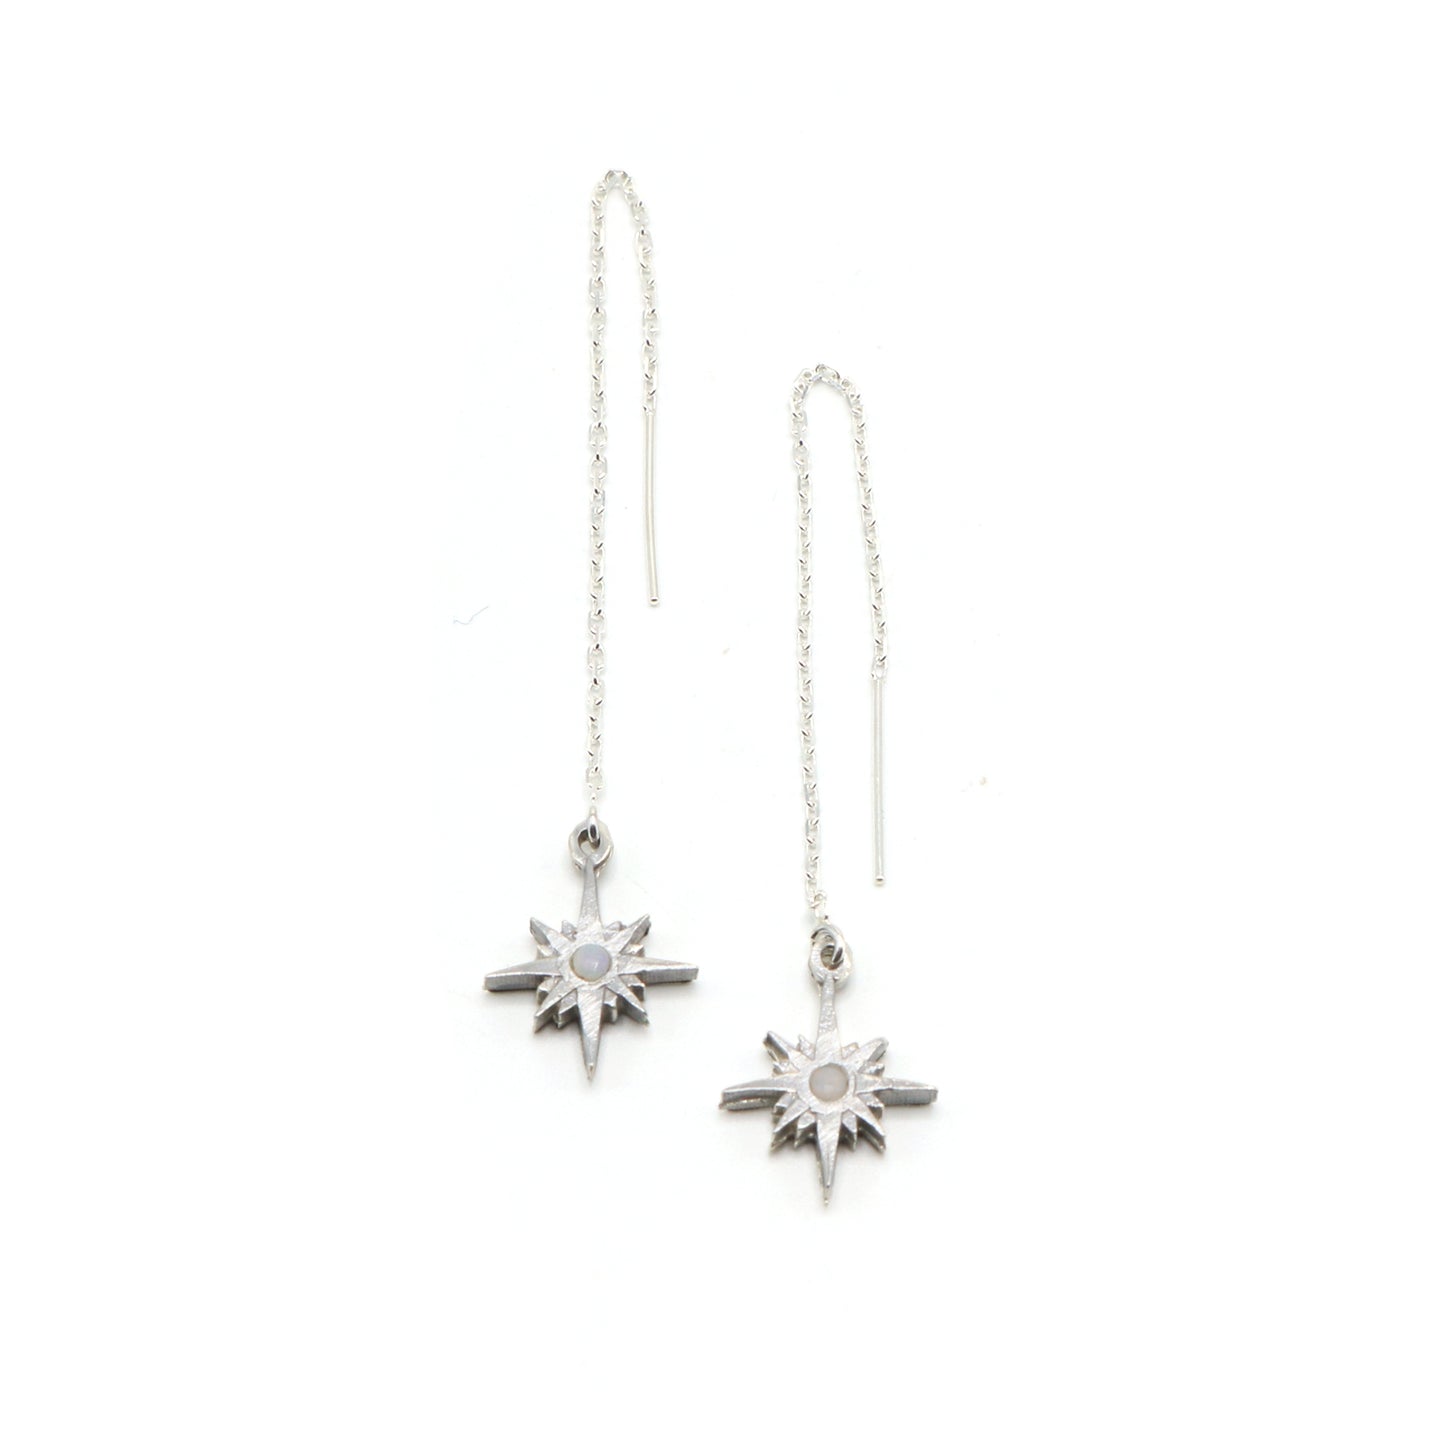 Mini Starburst Threader Earrings - Sterling Silver with White Opal